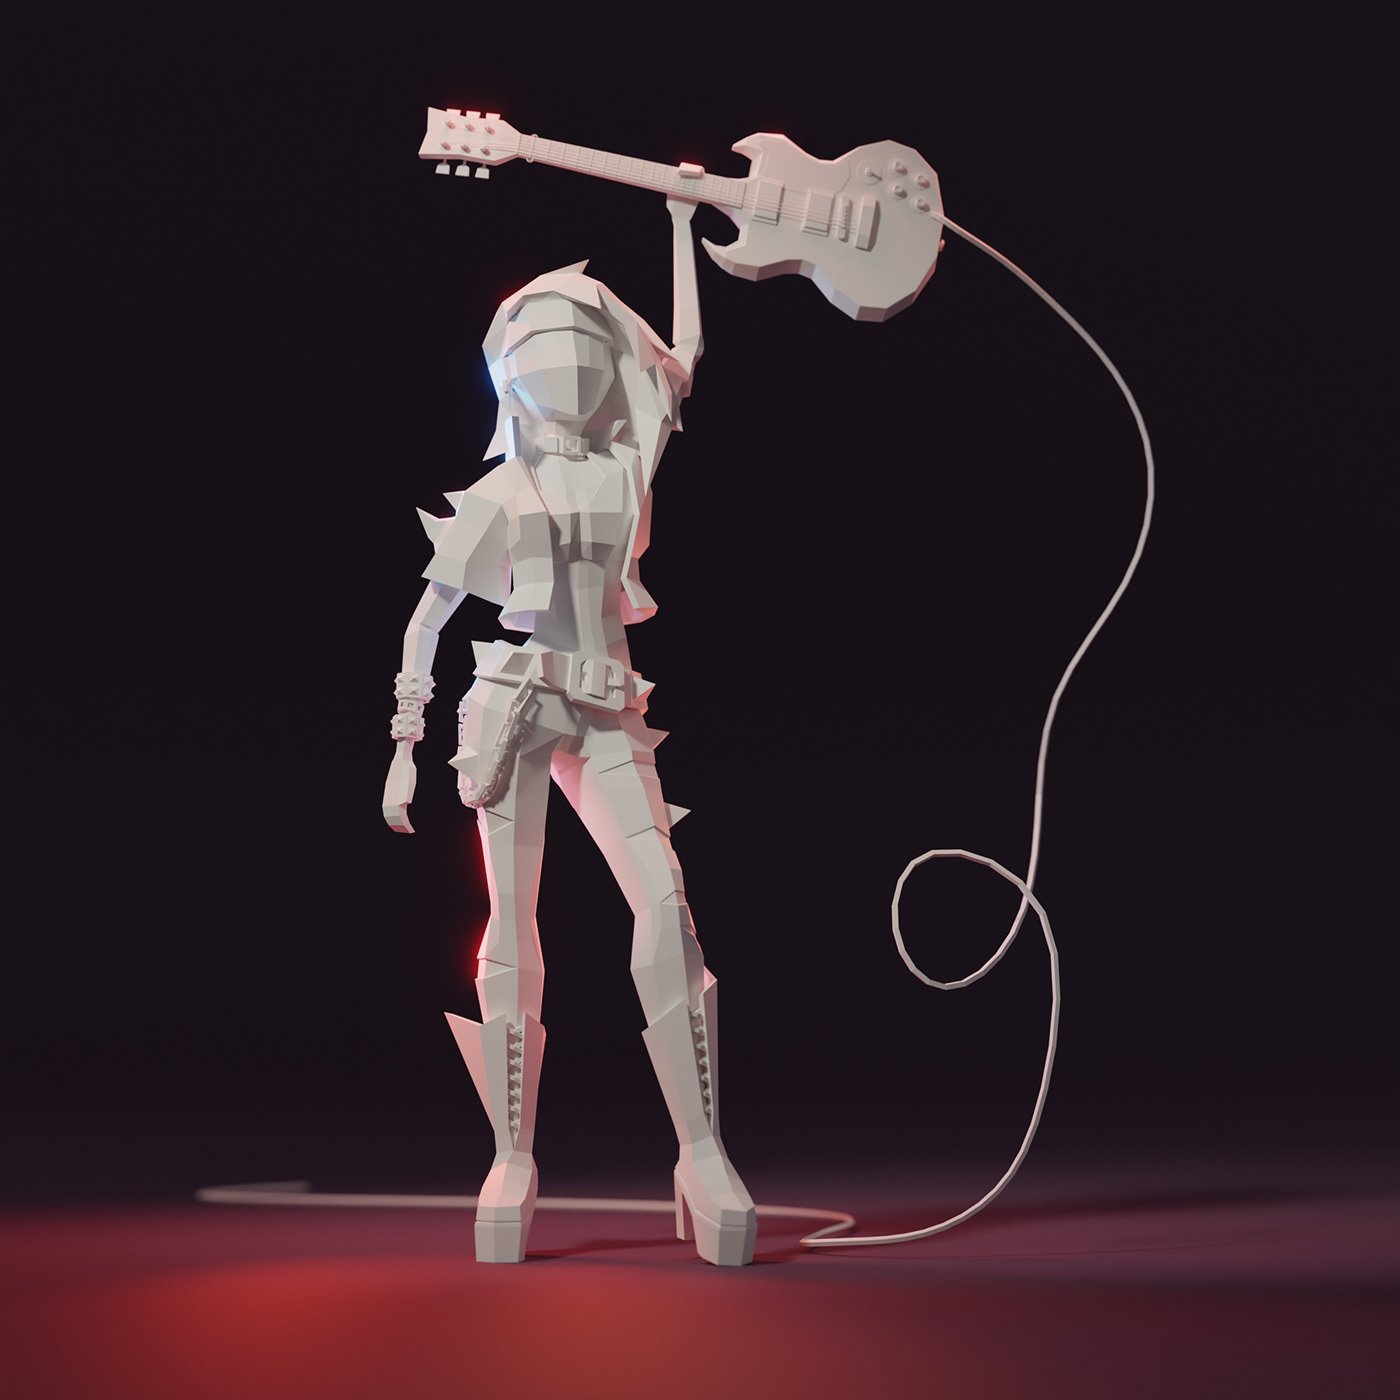 3D Character characterdesign guitar lowpoly metal punk rock rocknroll